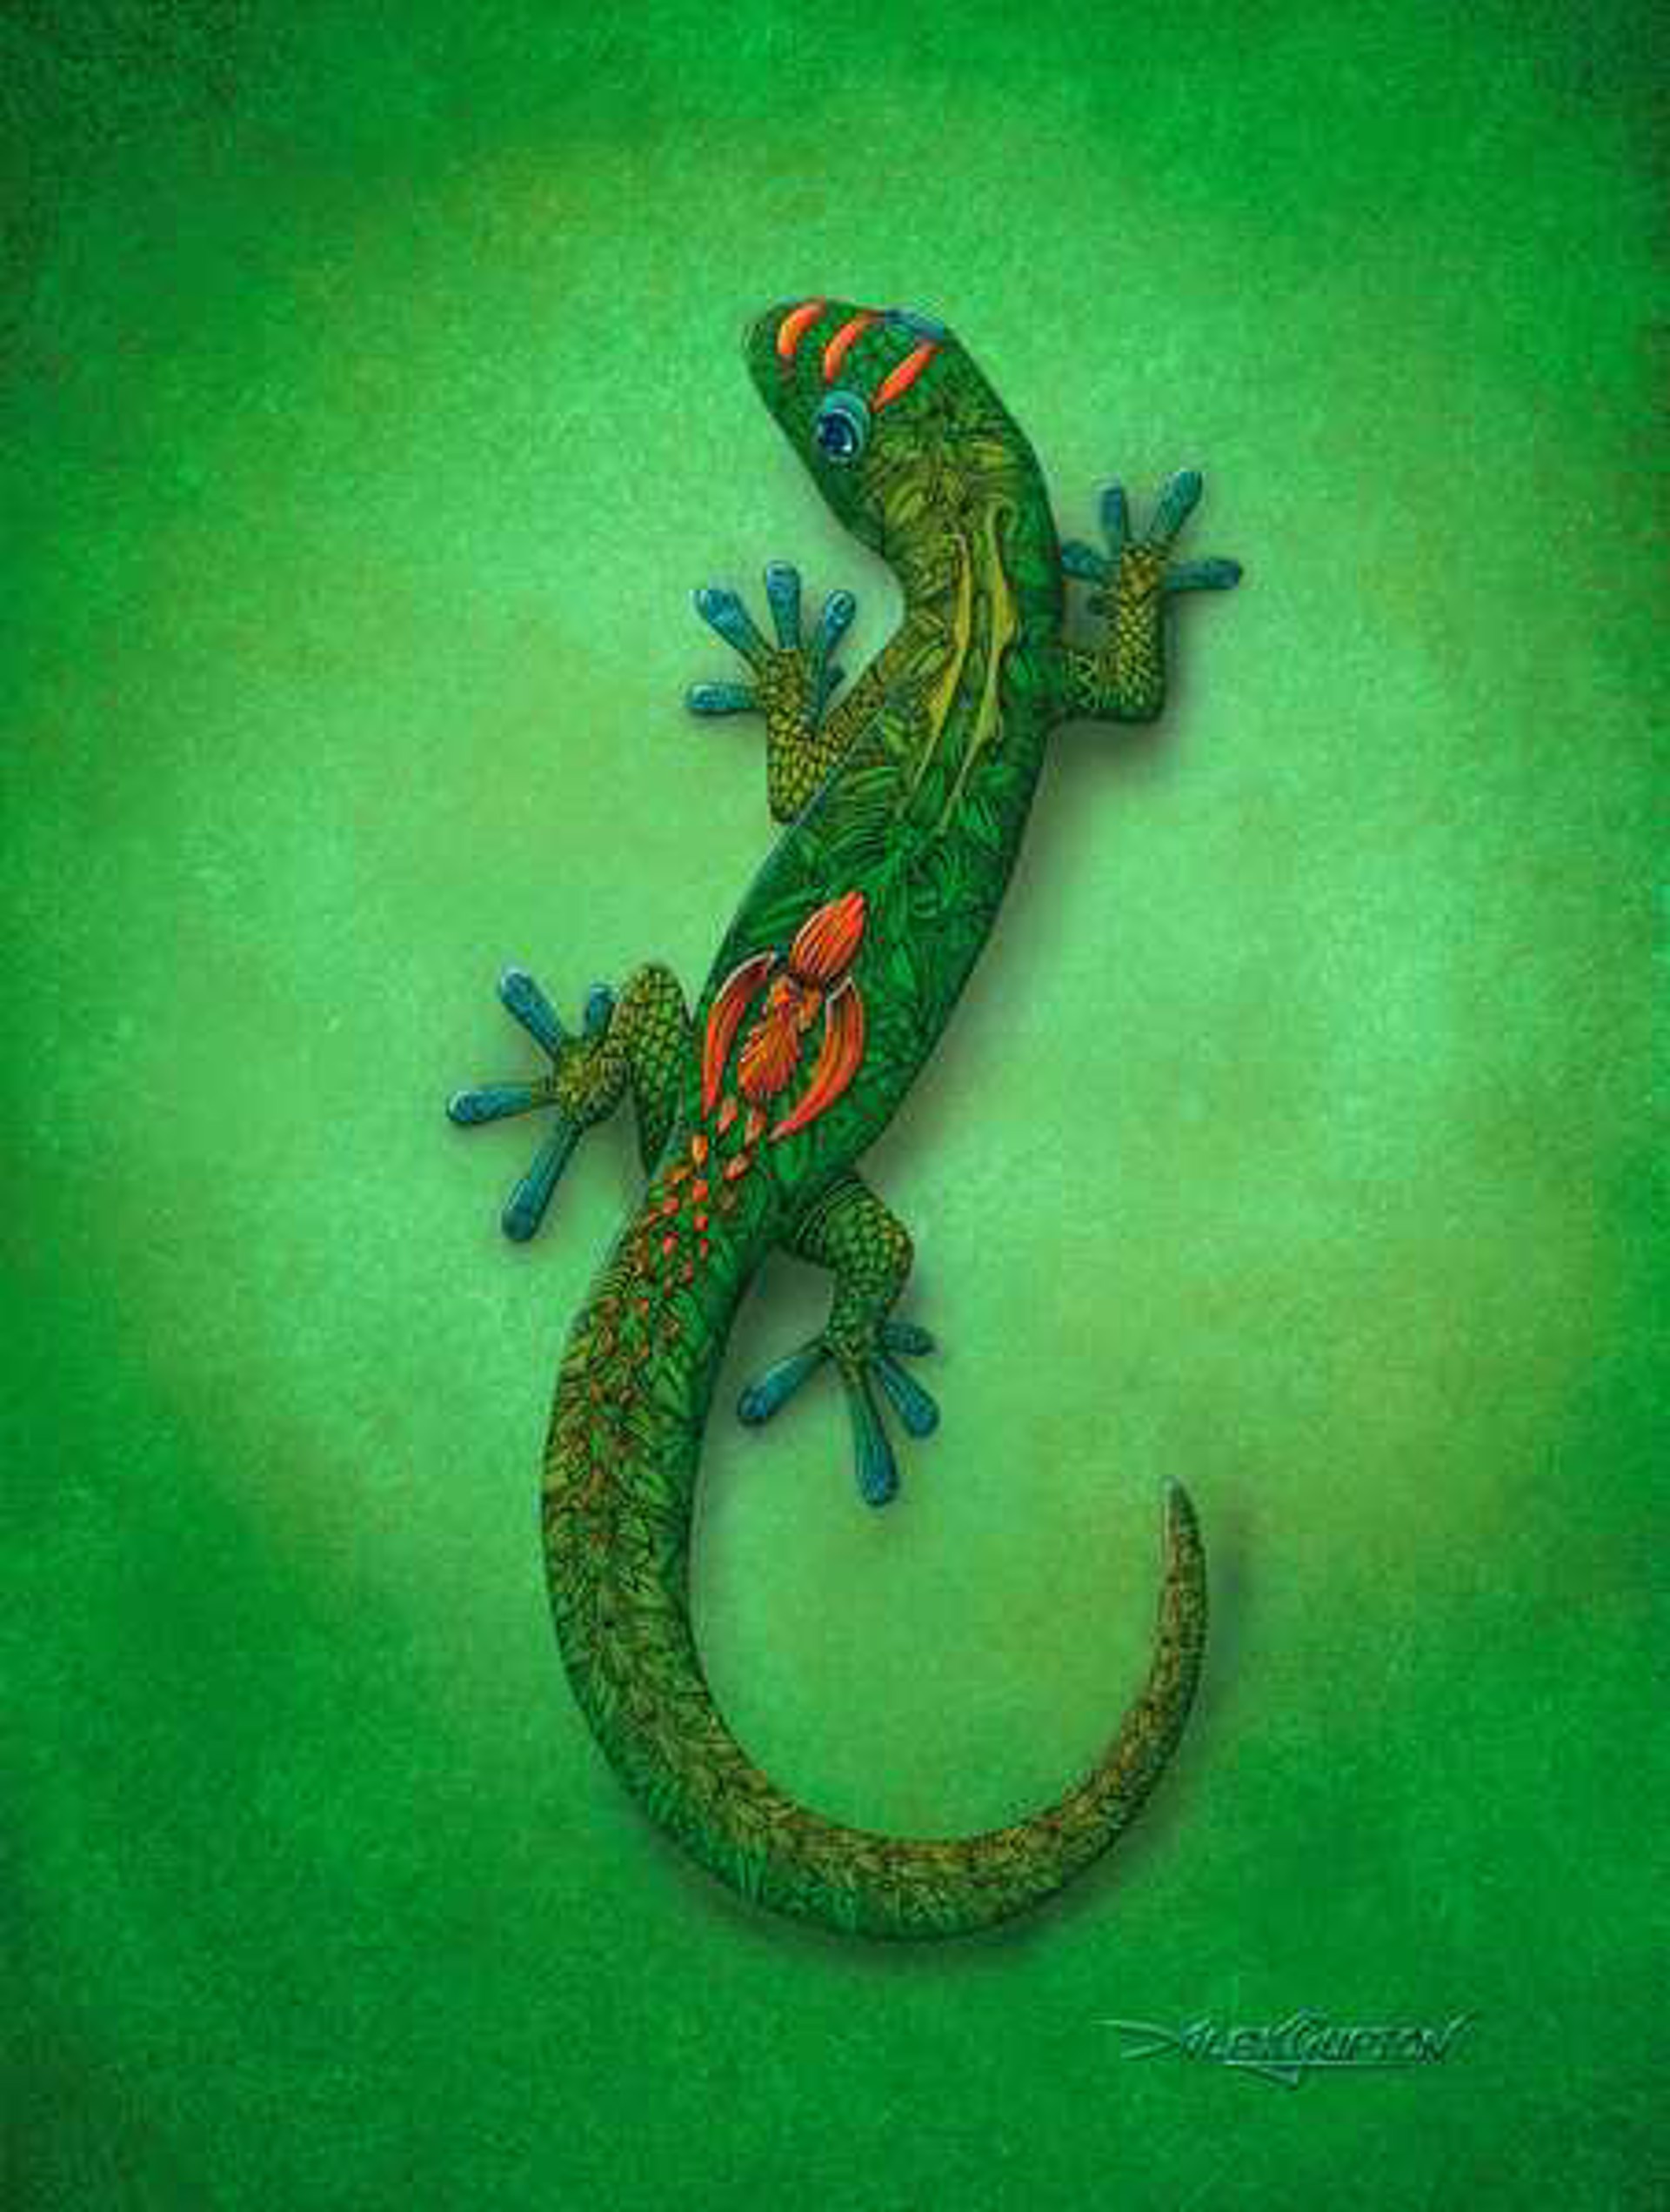 Green Day Gecko by Alex Gupton